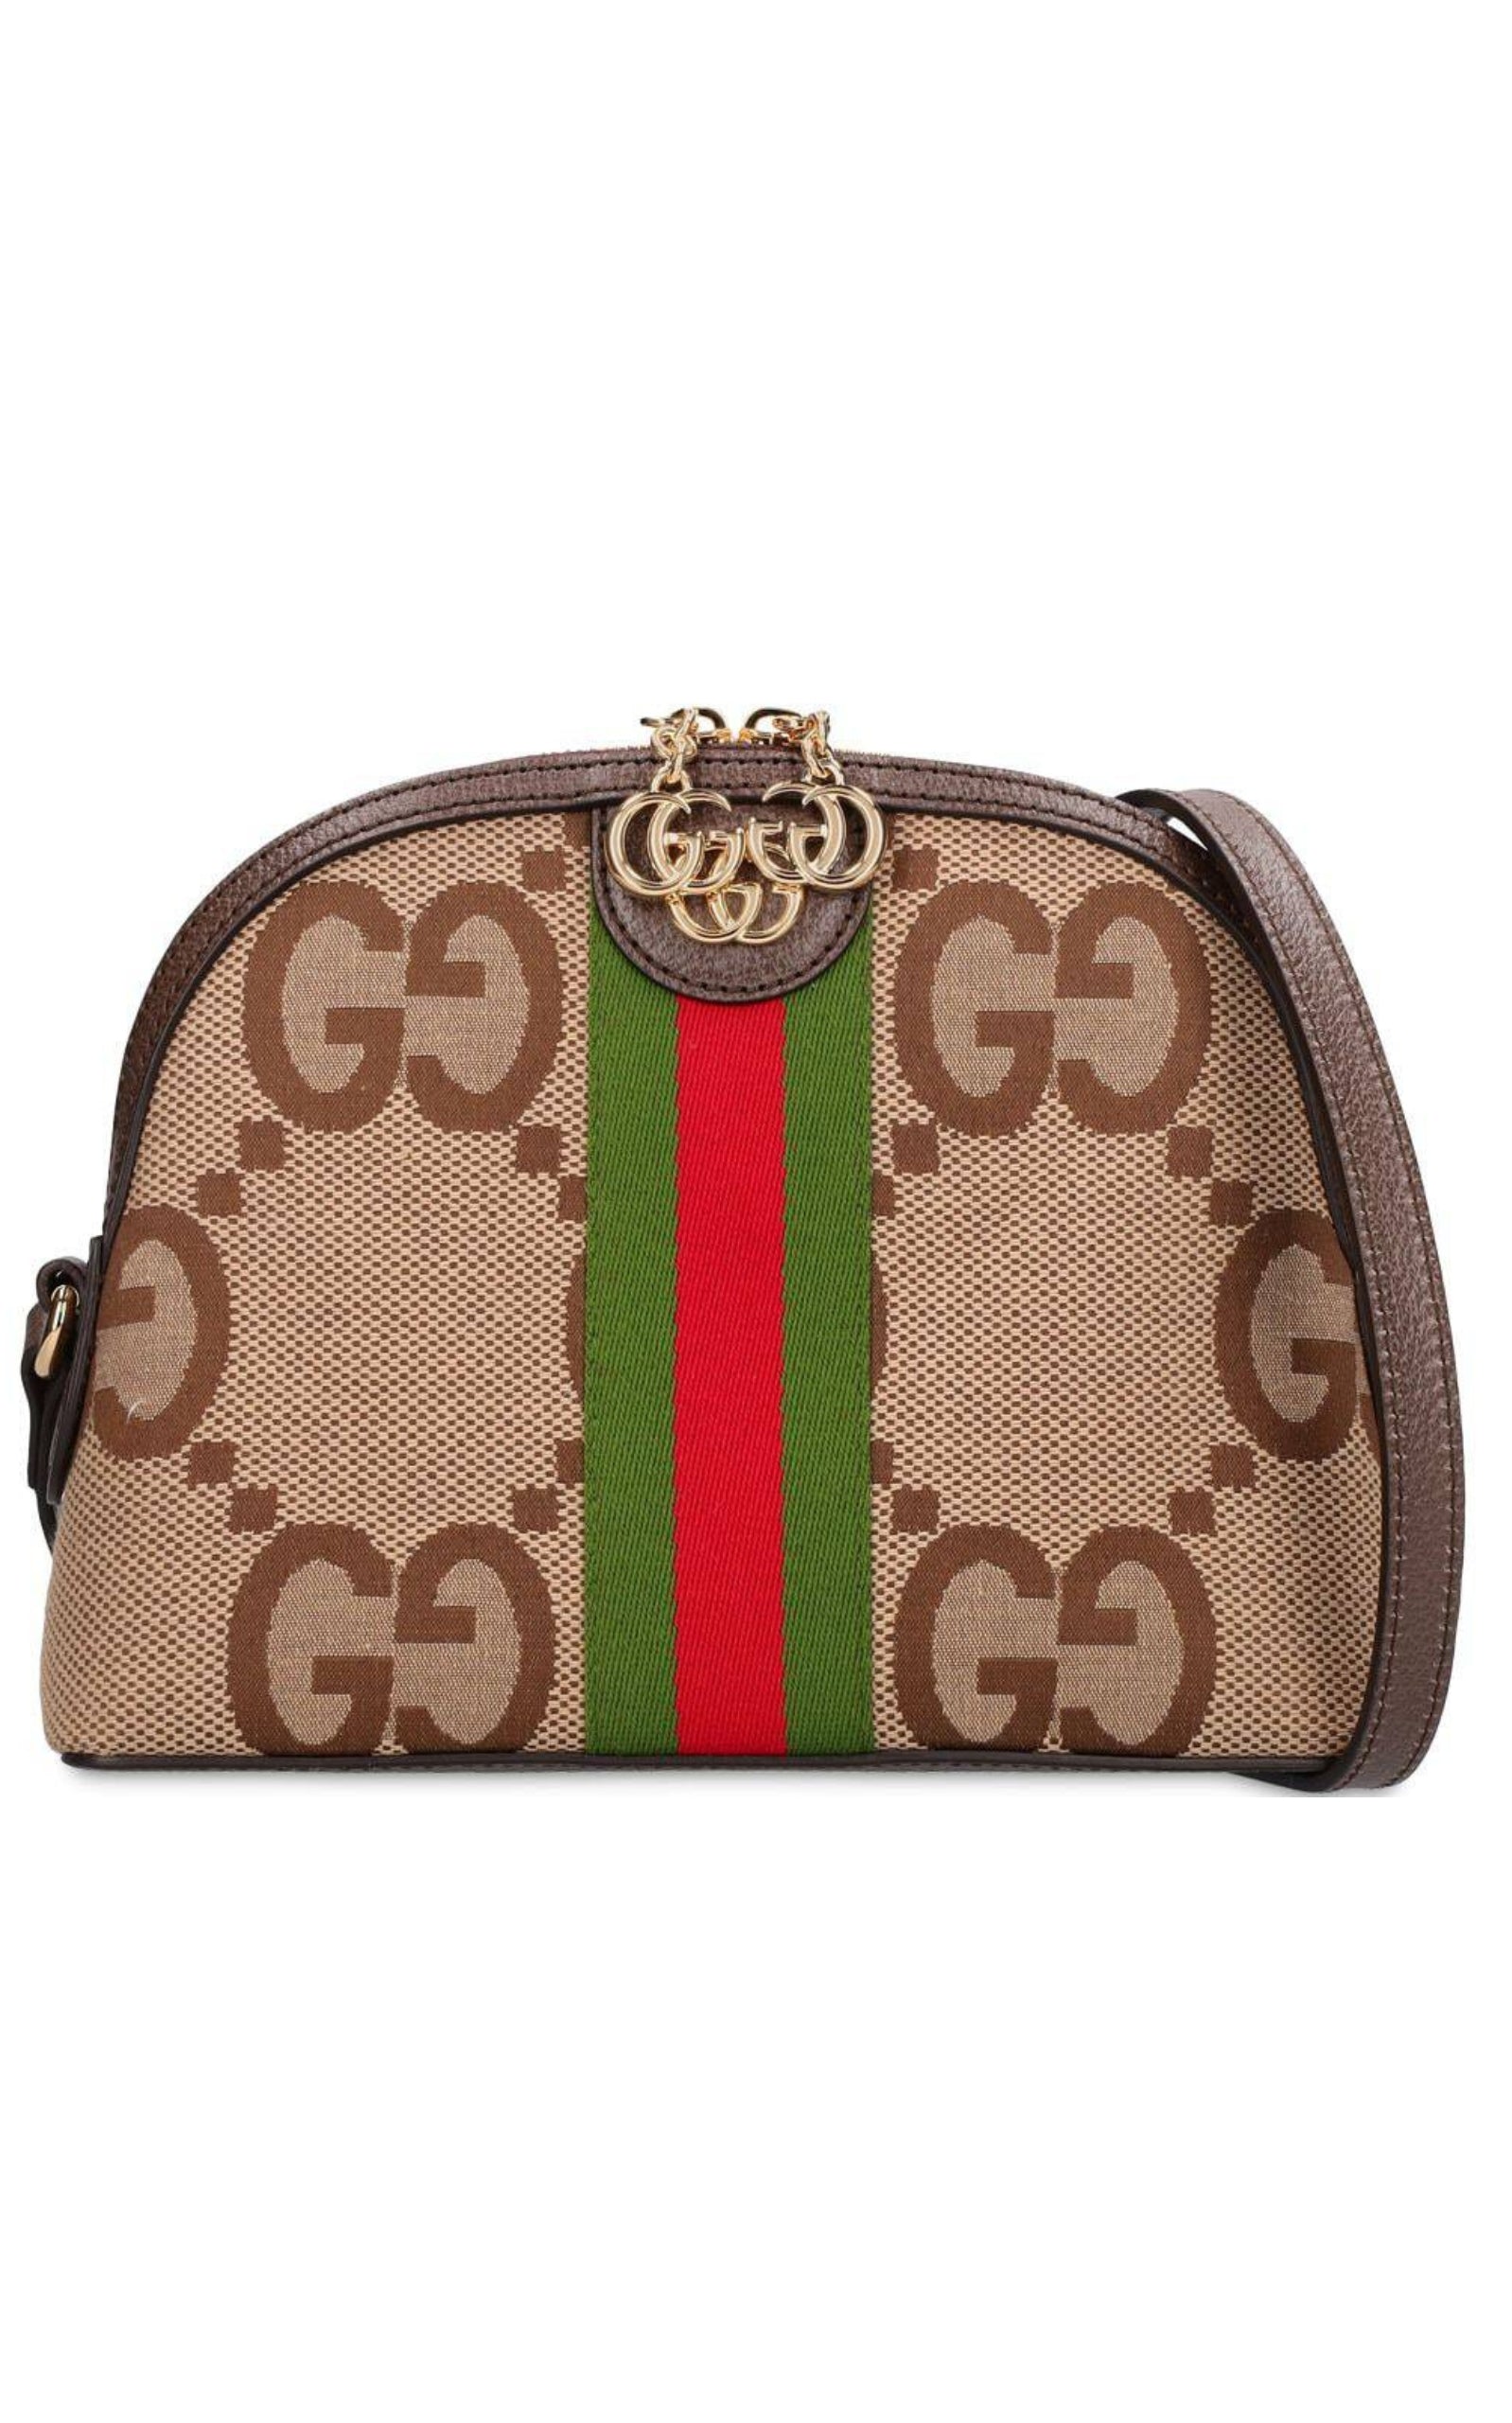 Gucci Leather Jumbo GG Backpack